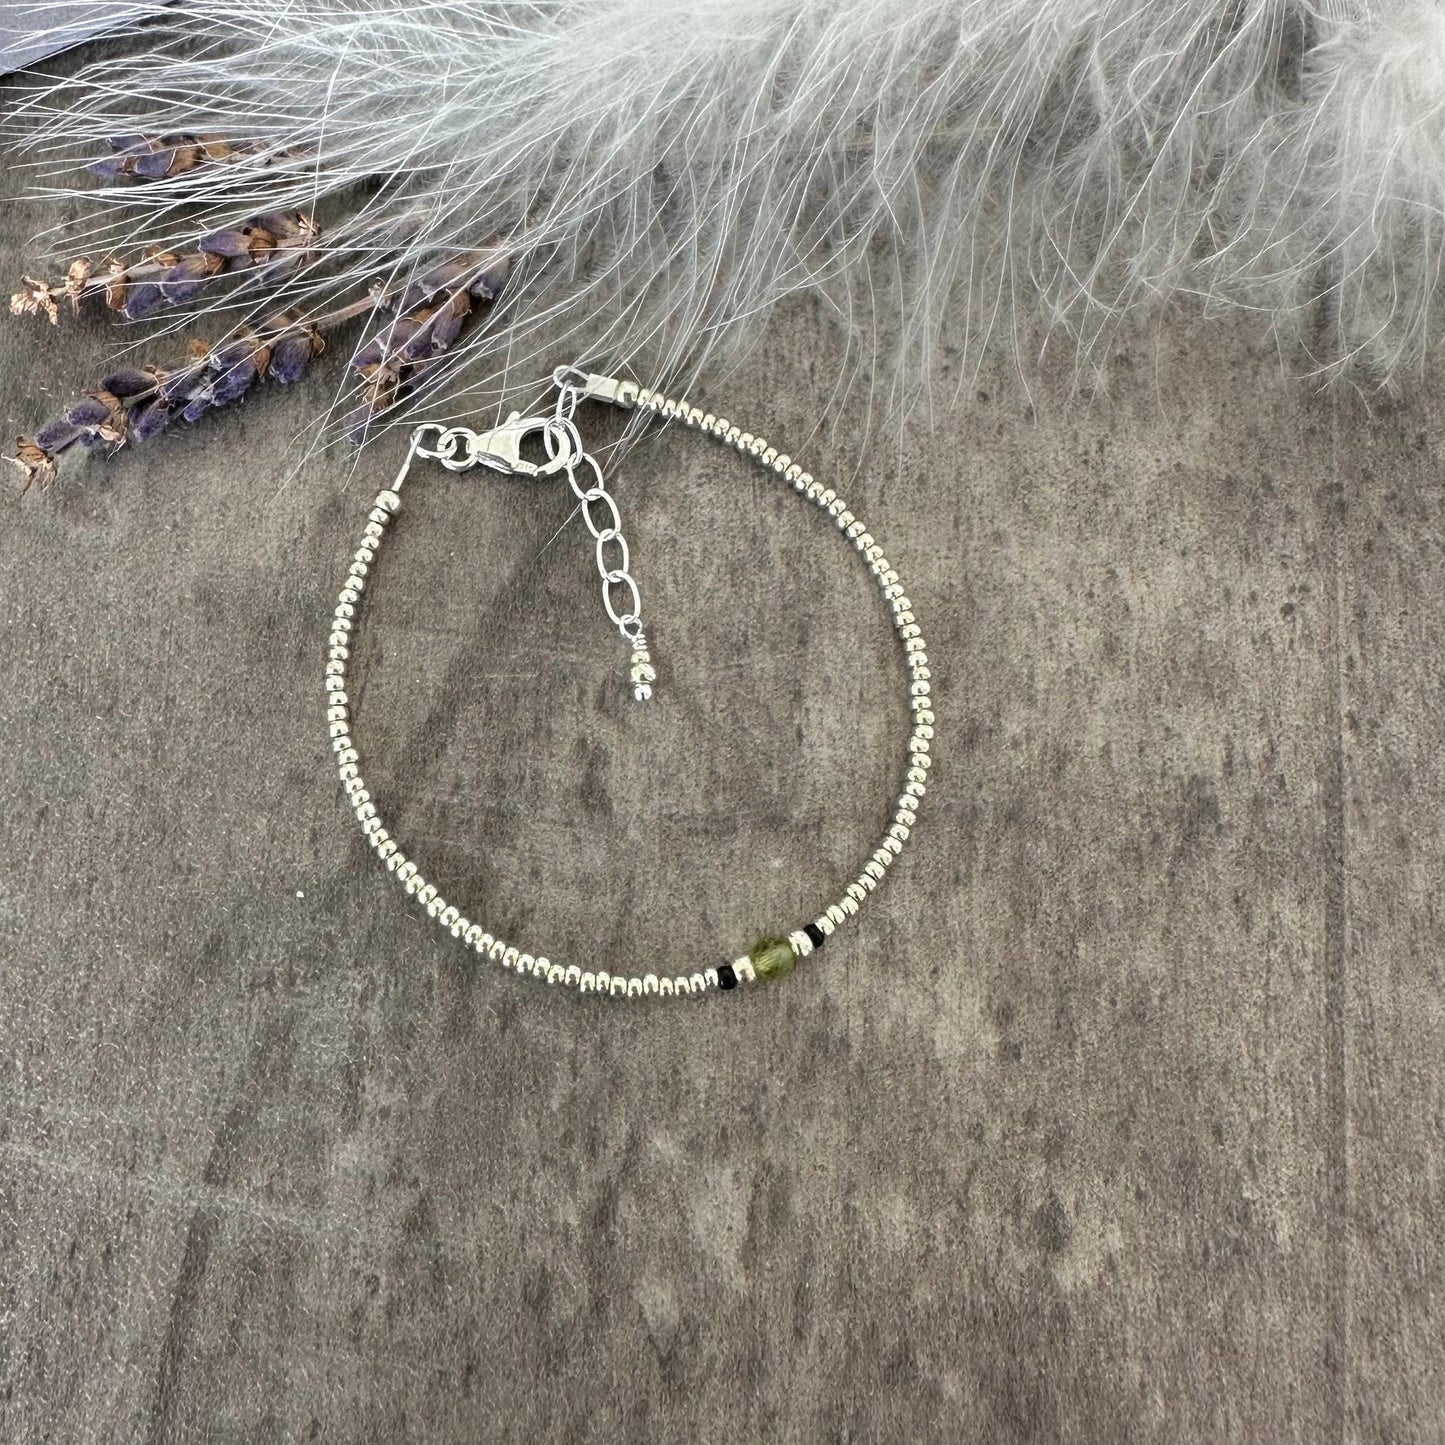 Birthstone seed bead bracelet